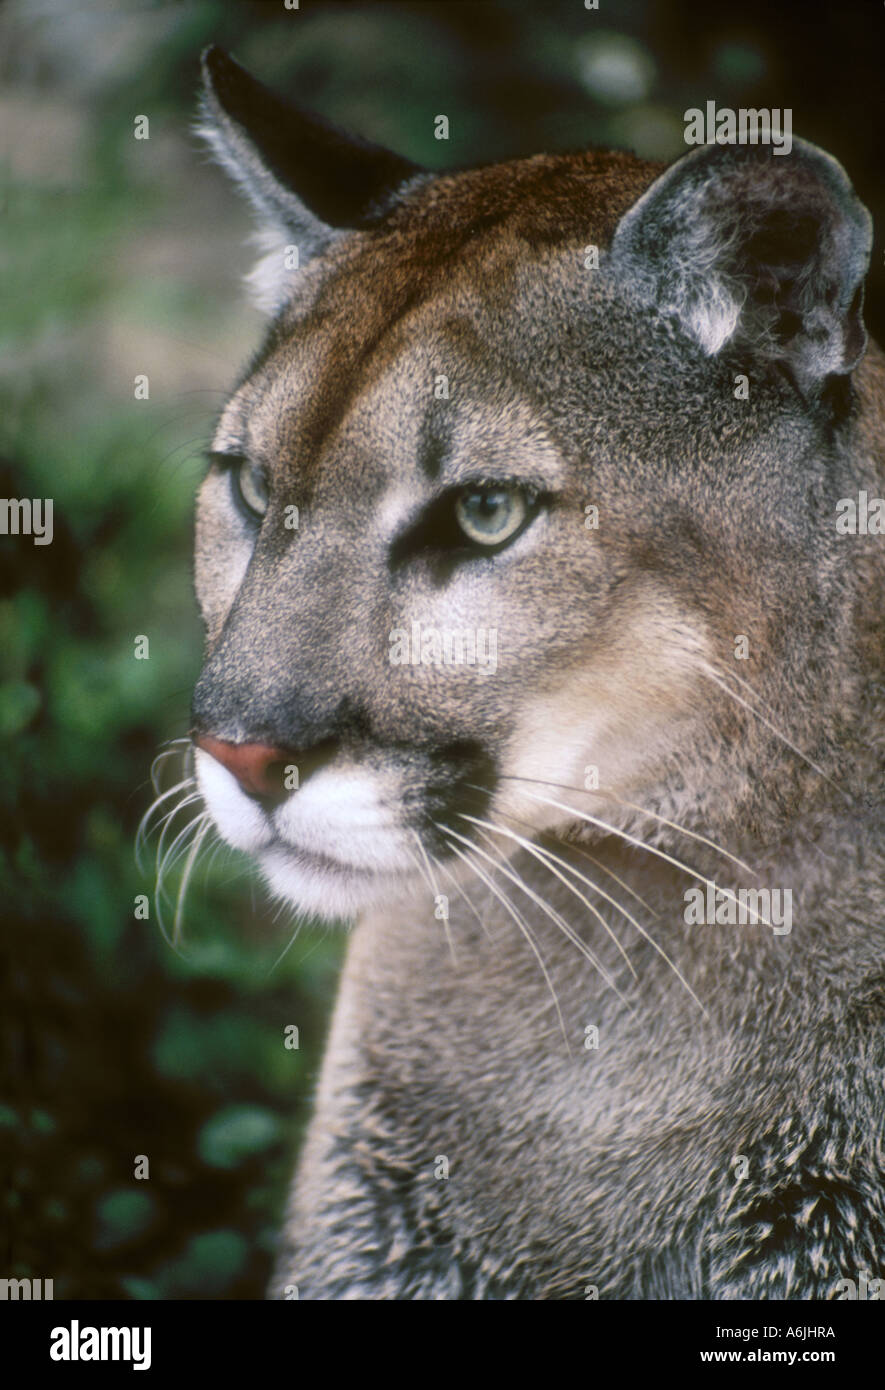 Florida panther cubs hi-res stock photography and images - Alamy